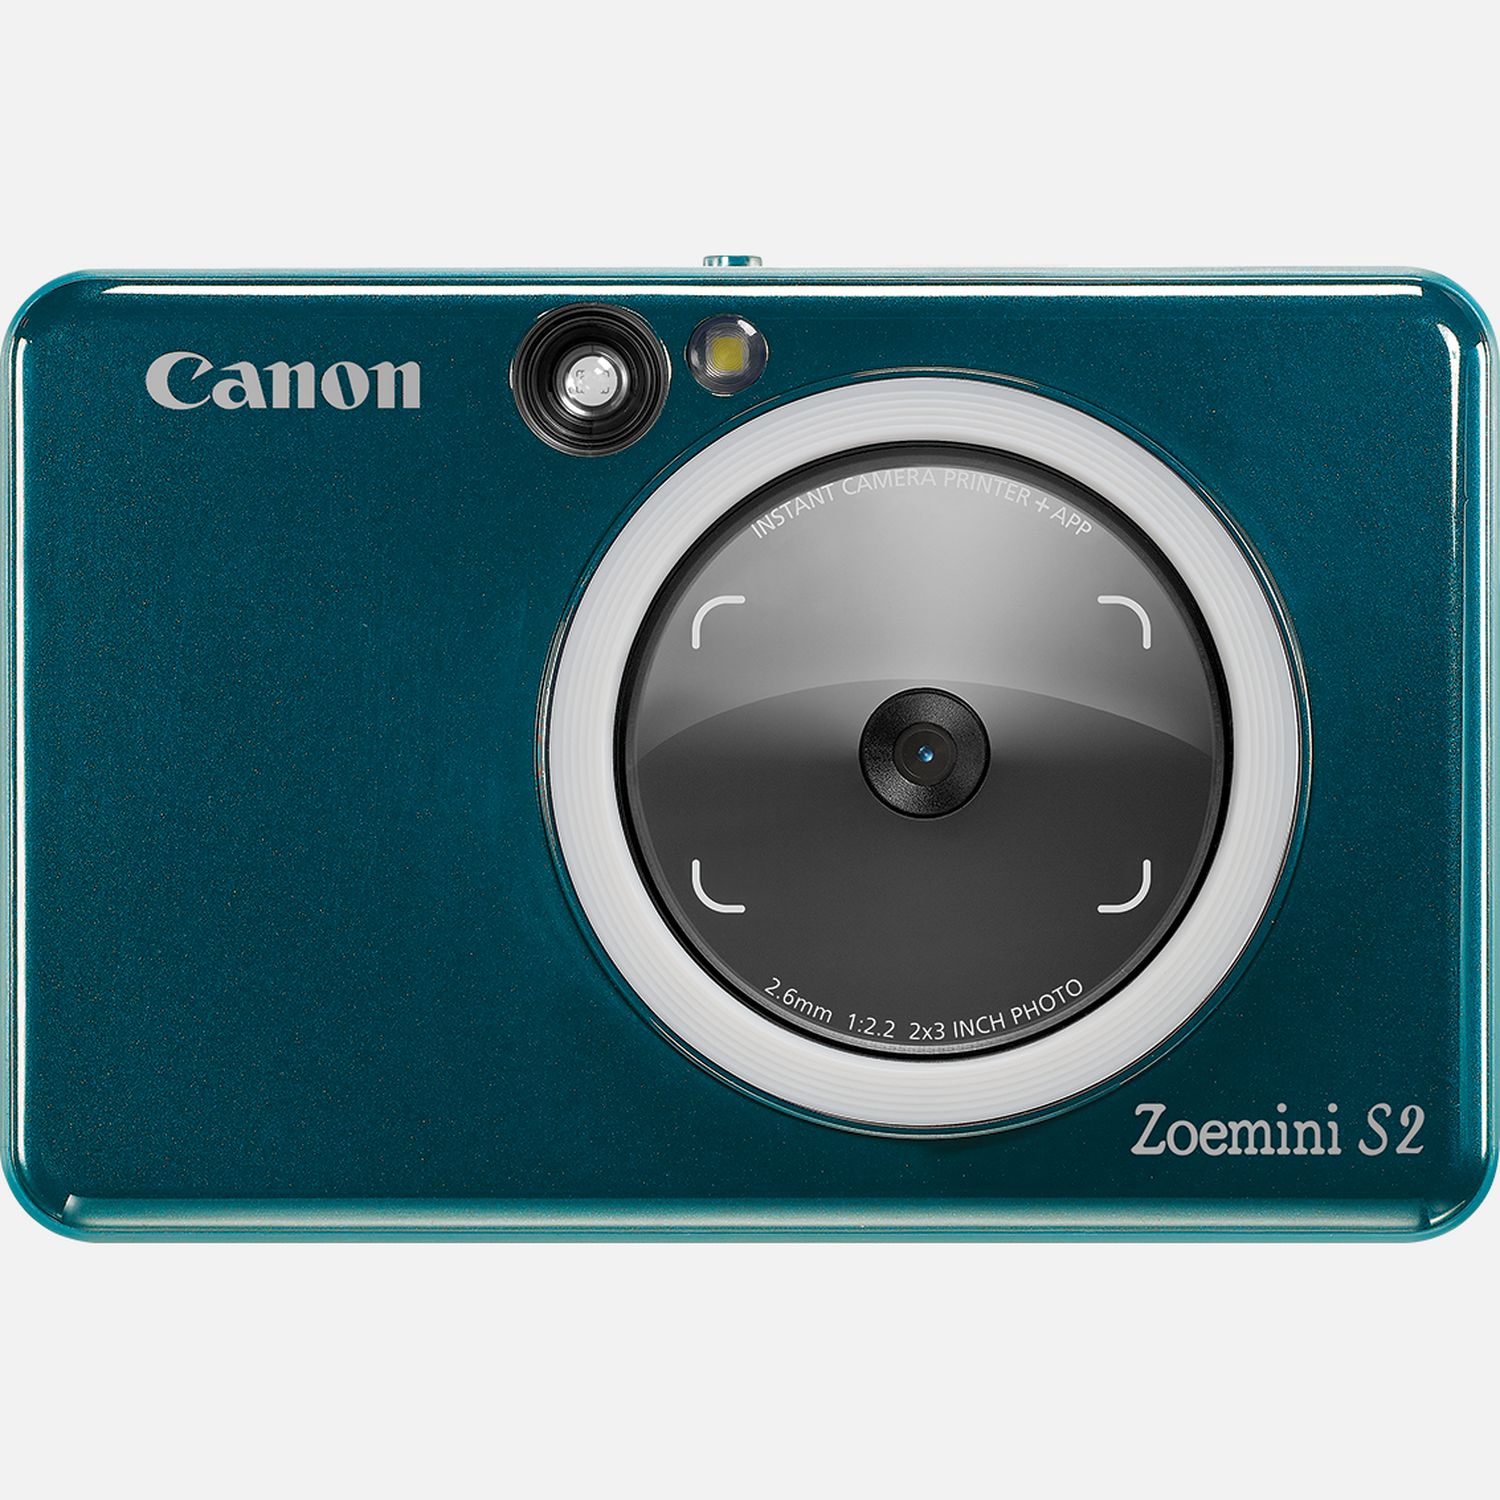 petróleo Mortal Preocupado Compra Cámara impresora fotográfica instantánea Canon Zoemini S2 en color,  azul turquesa. — Tienda Canon Espana